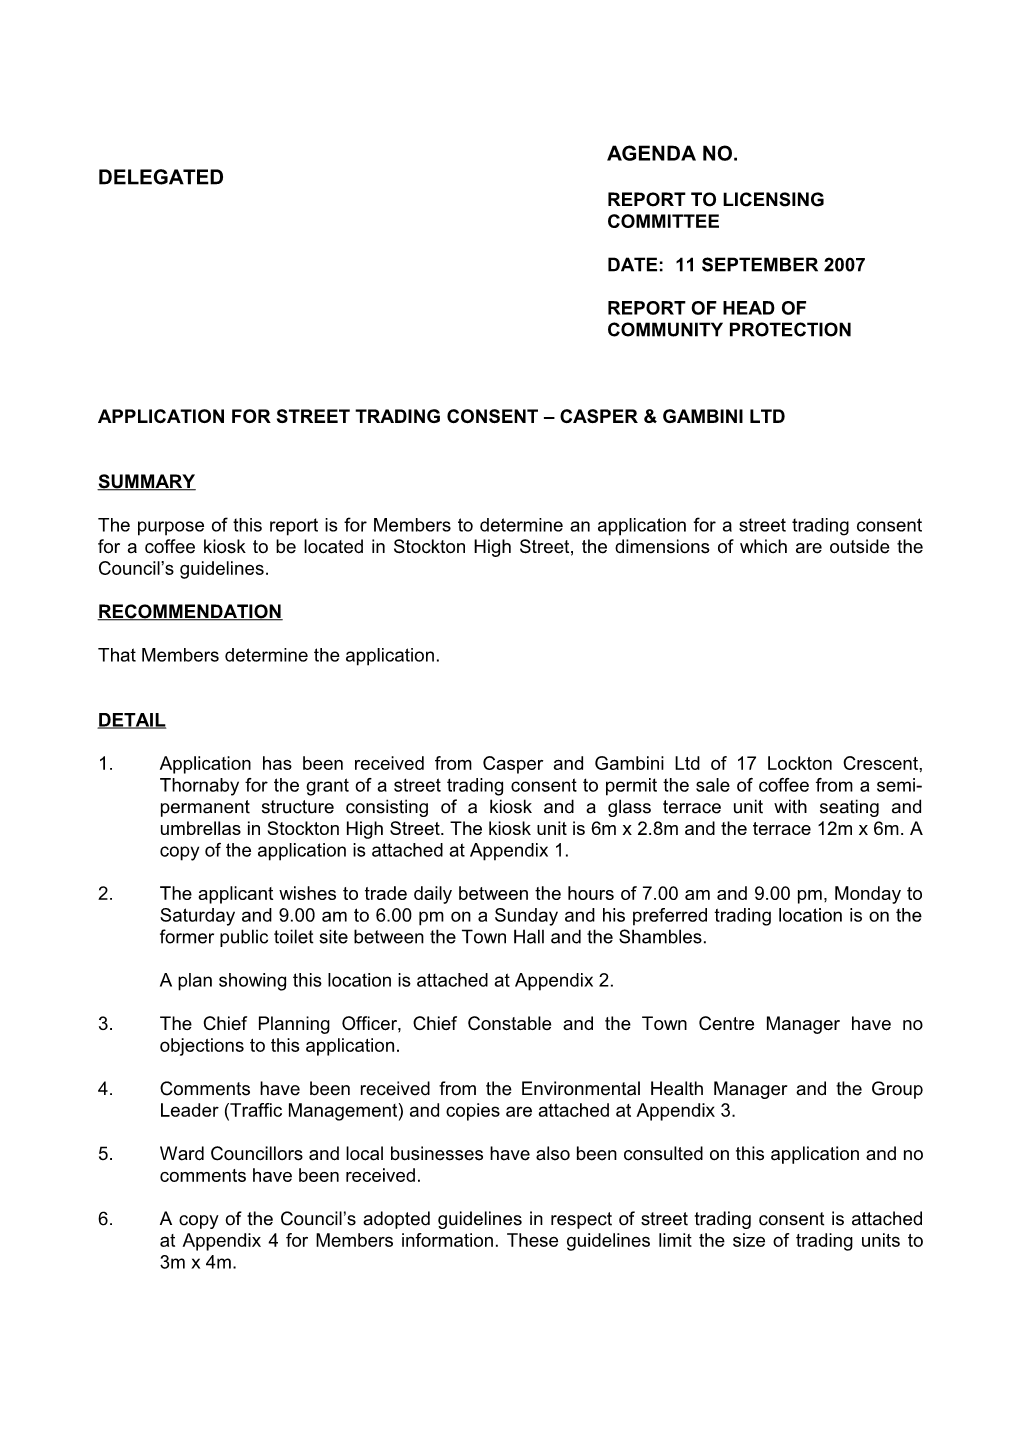 Application for Street Trading Consent Casper & Gambini Ltd